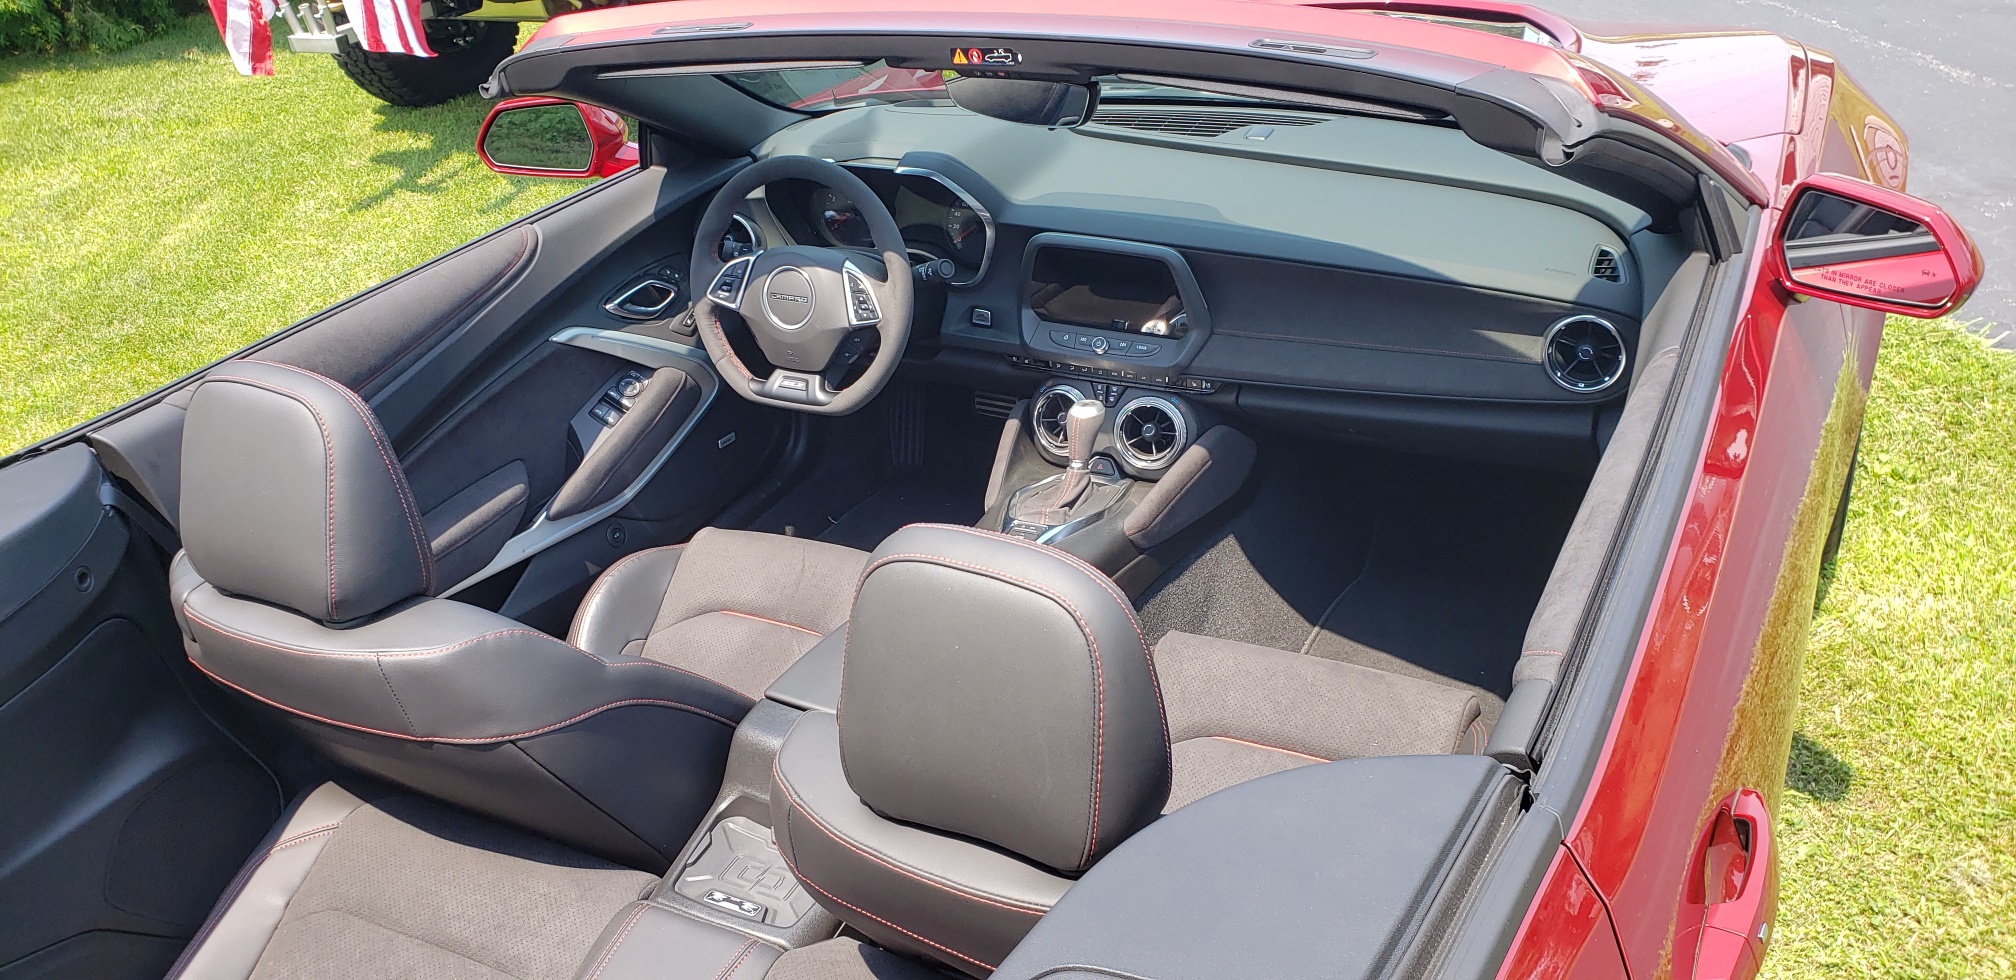 2021-camaro-convertible-inside-view